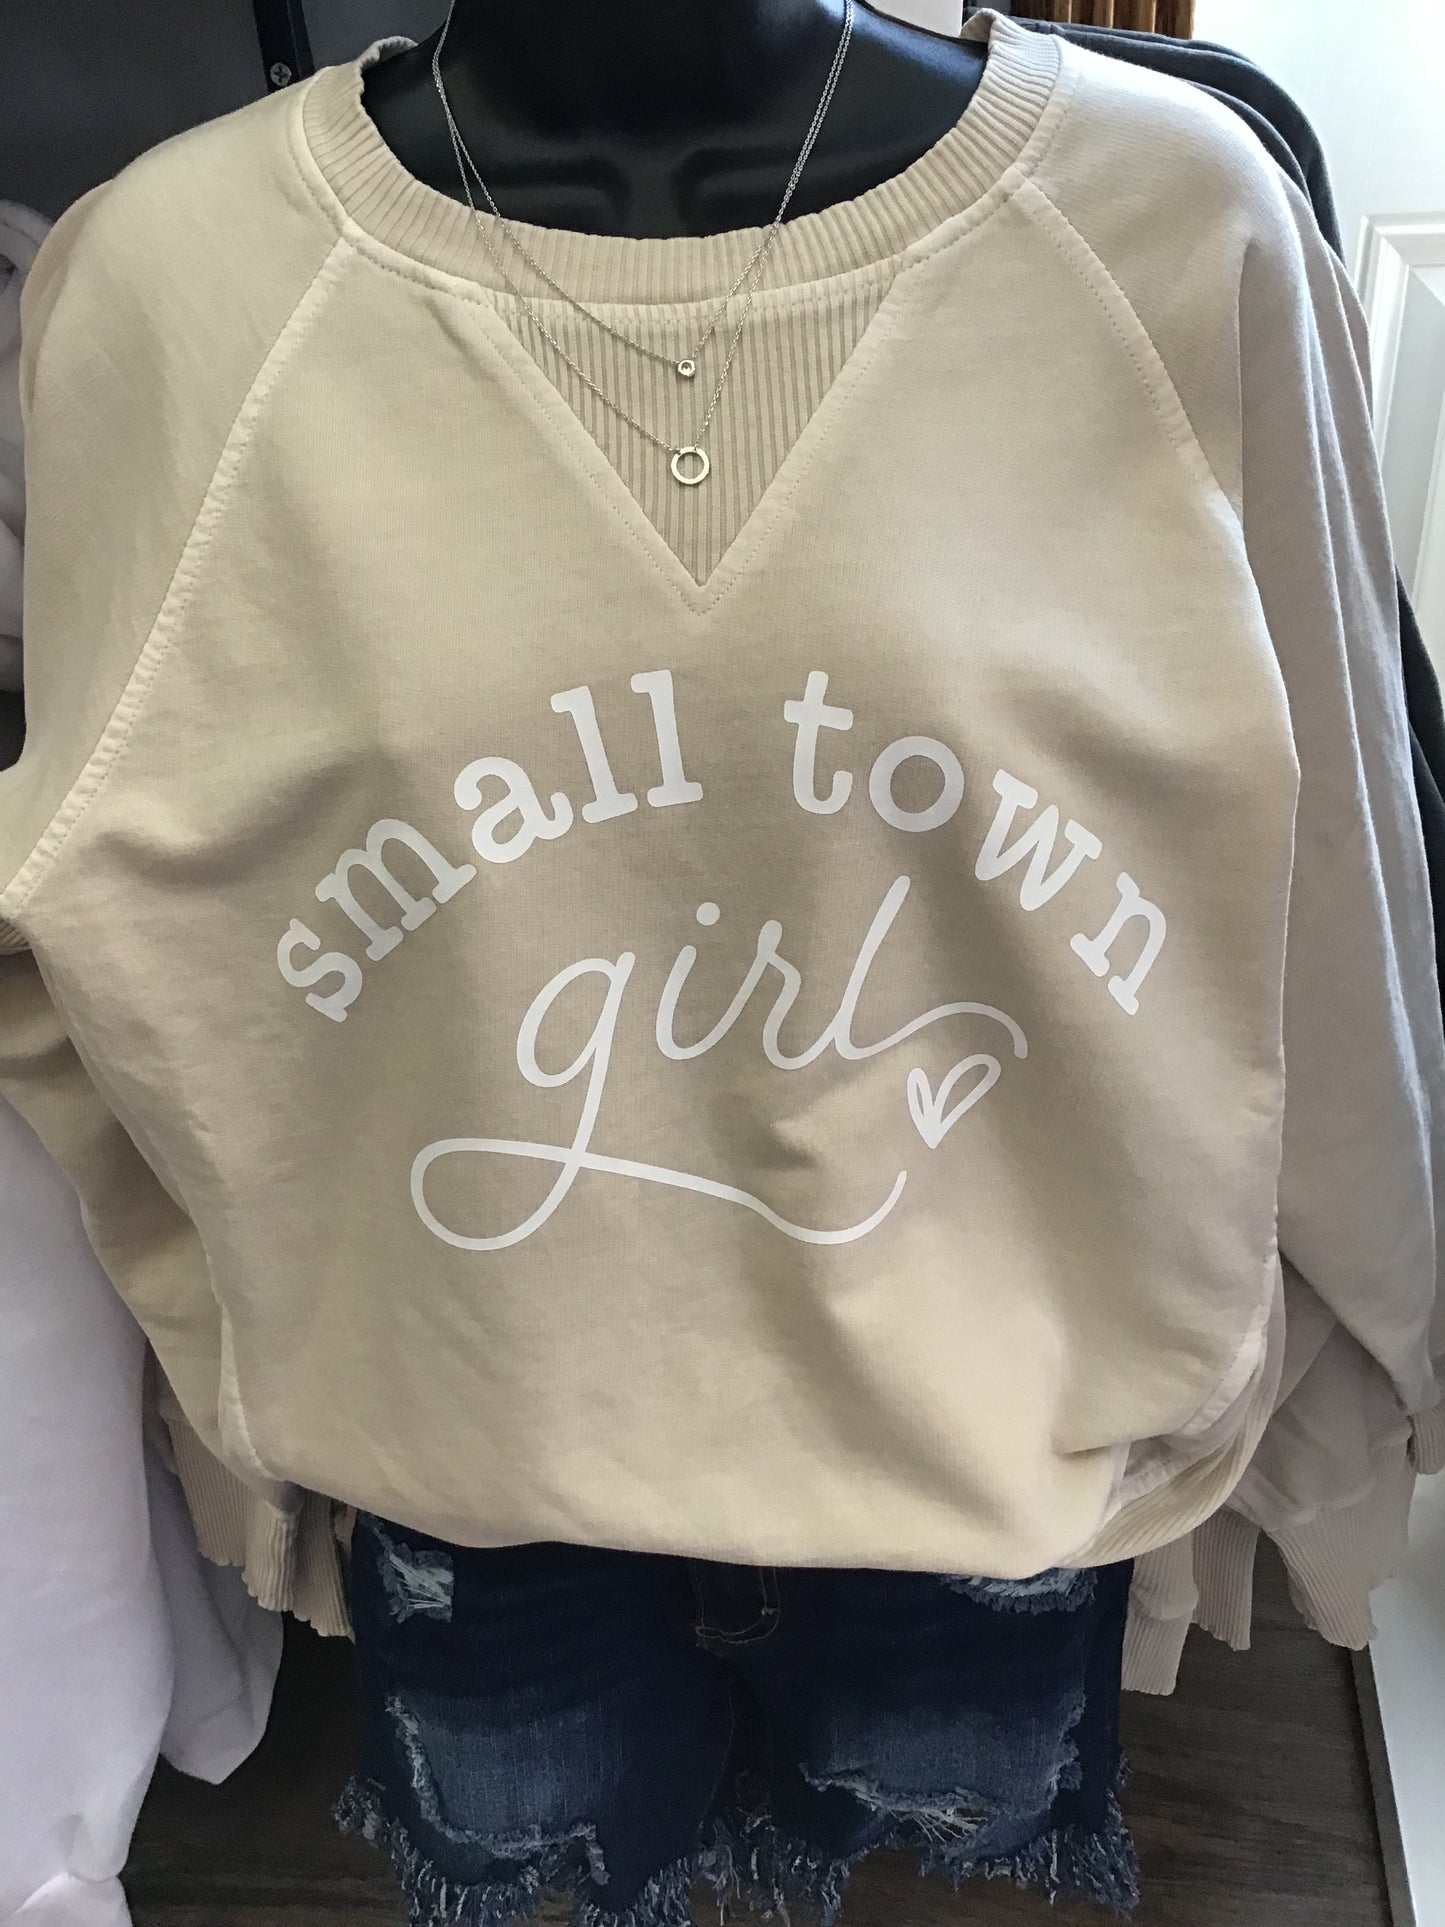 SAND BEIGE SMALL TOWN GIRL SWEATSHIRT PLUS